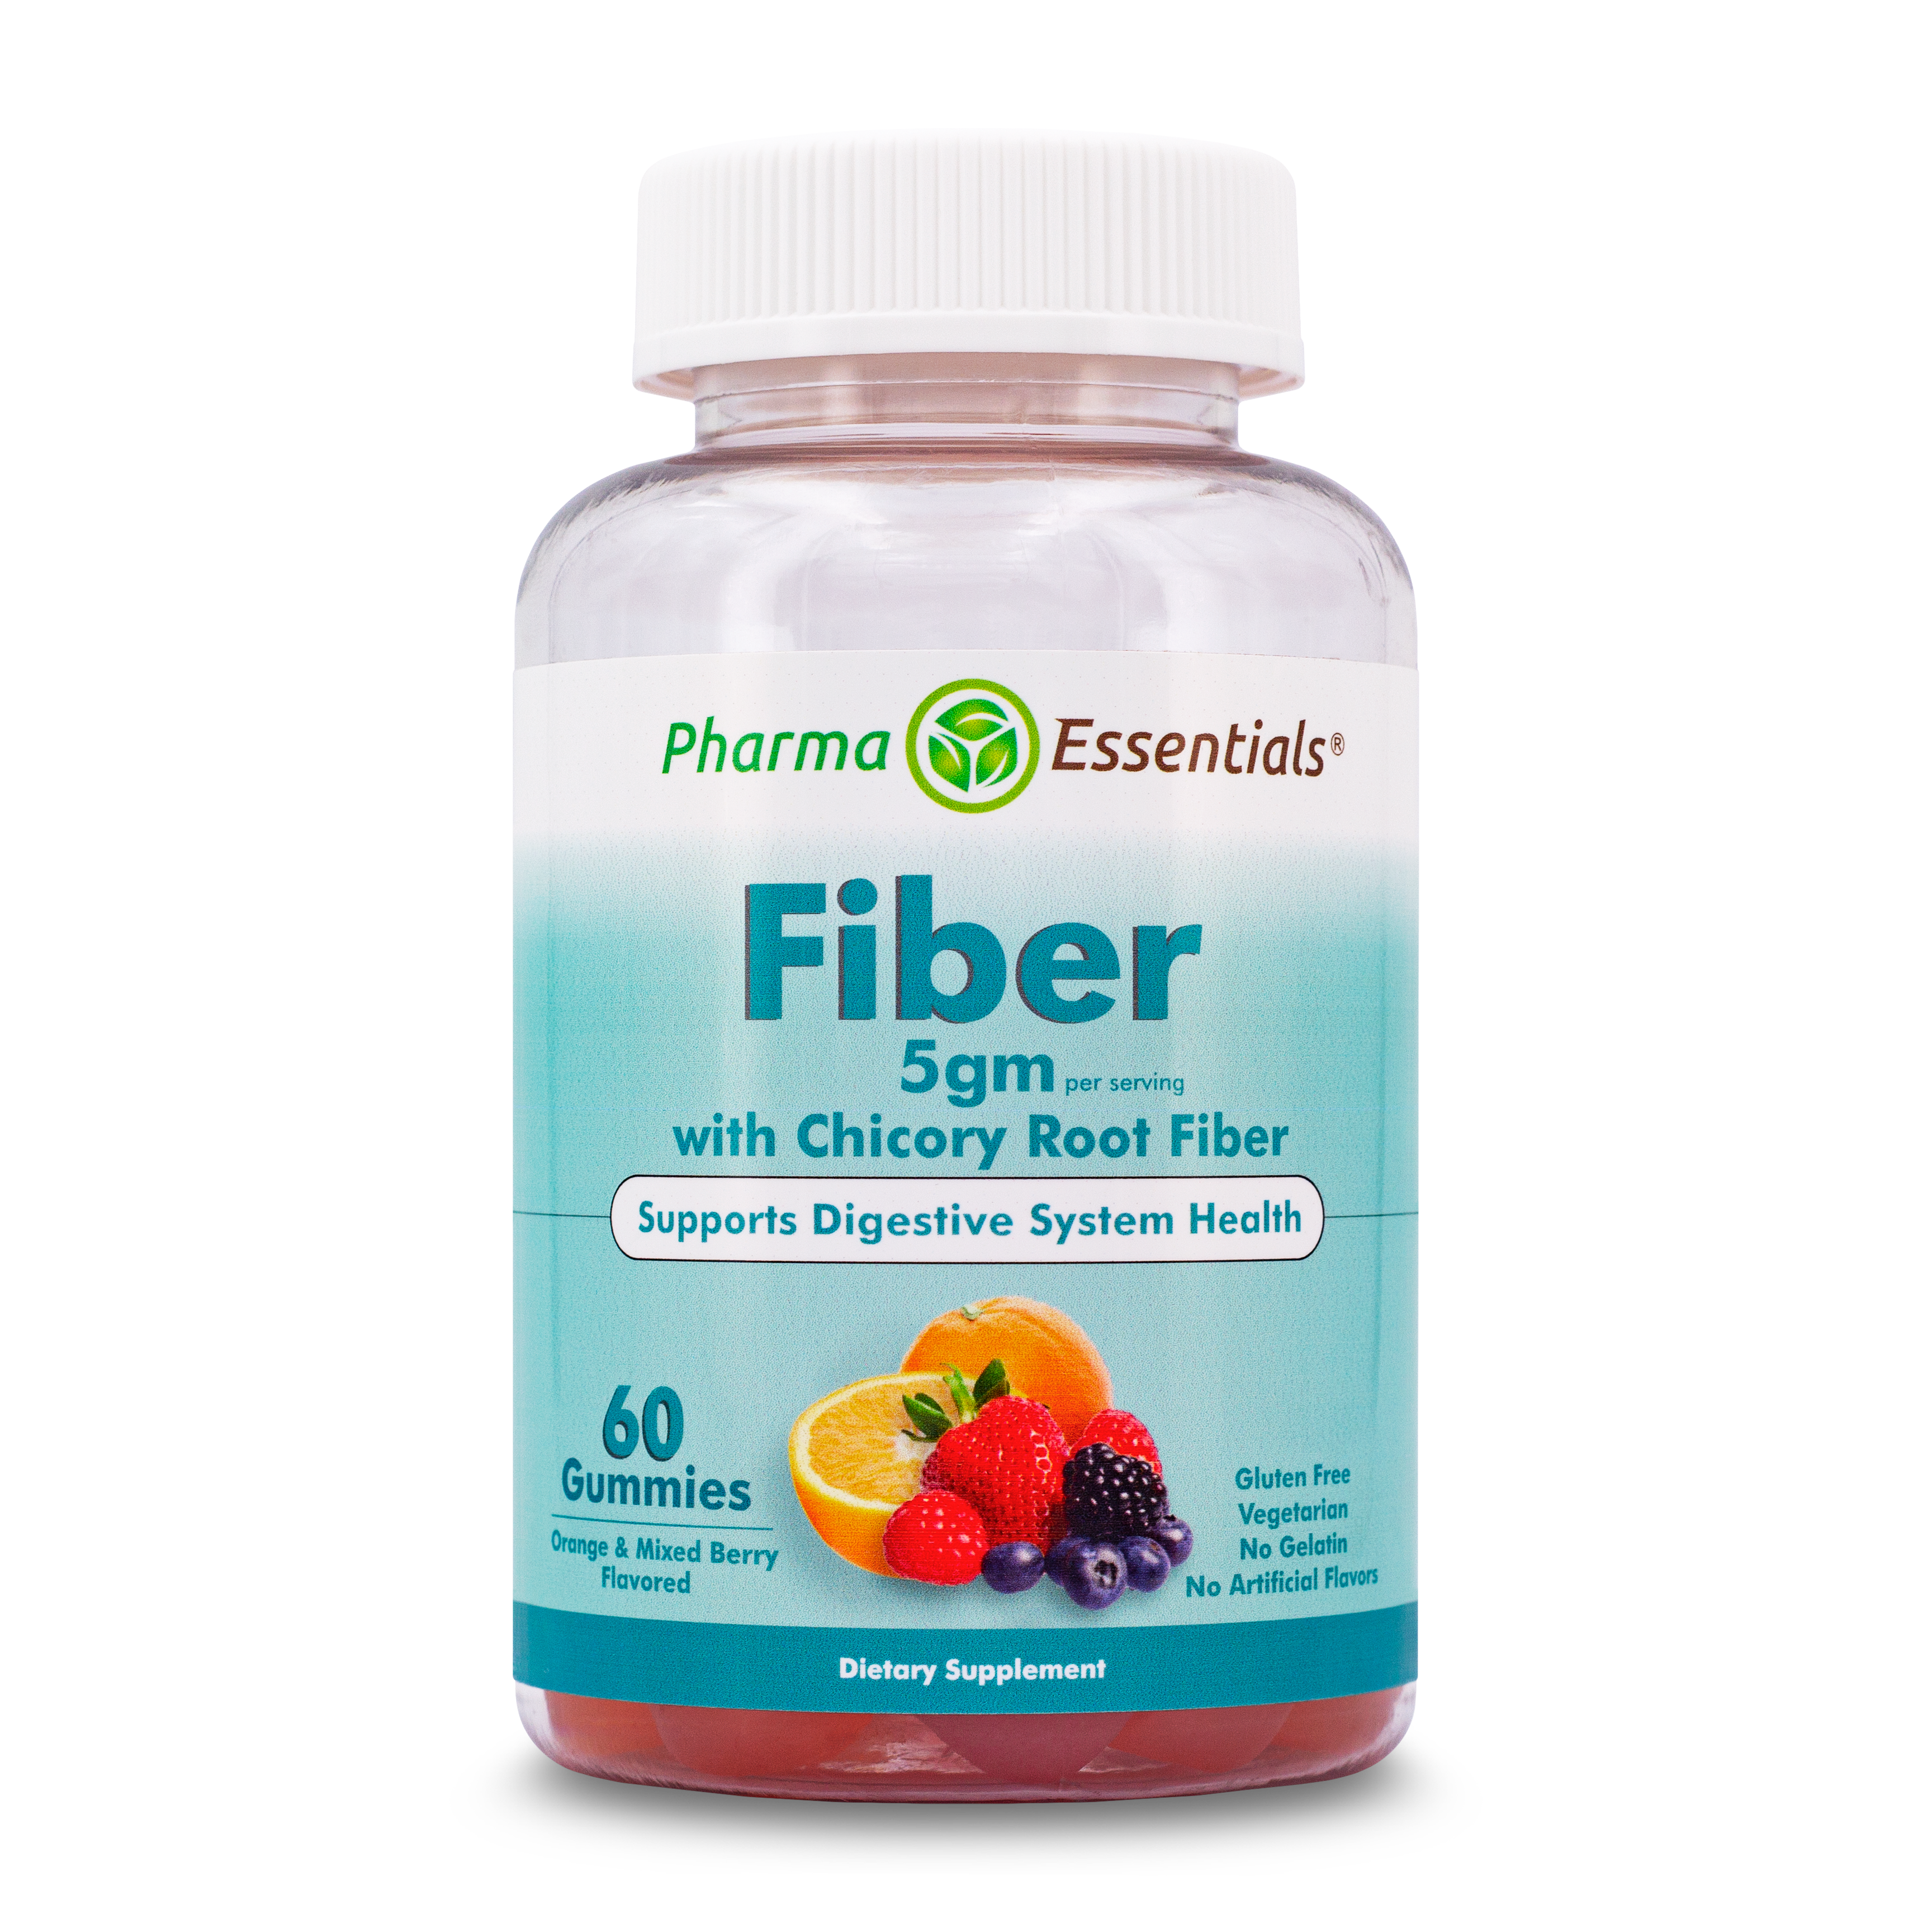 Fiber 5gm with Chicory Root Fiber, vegetarian gelatin-free gummies